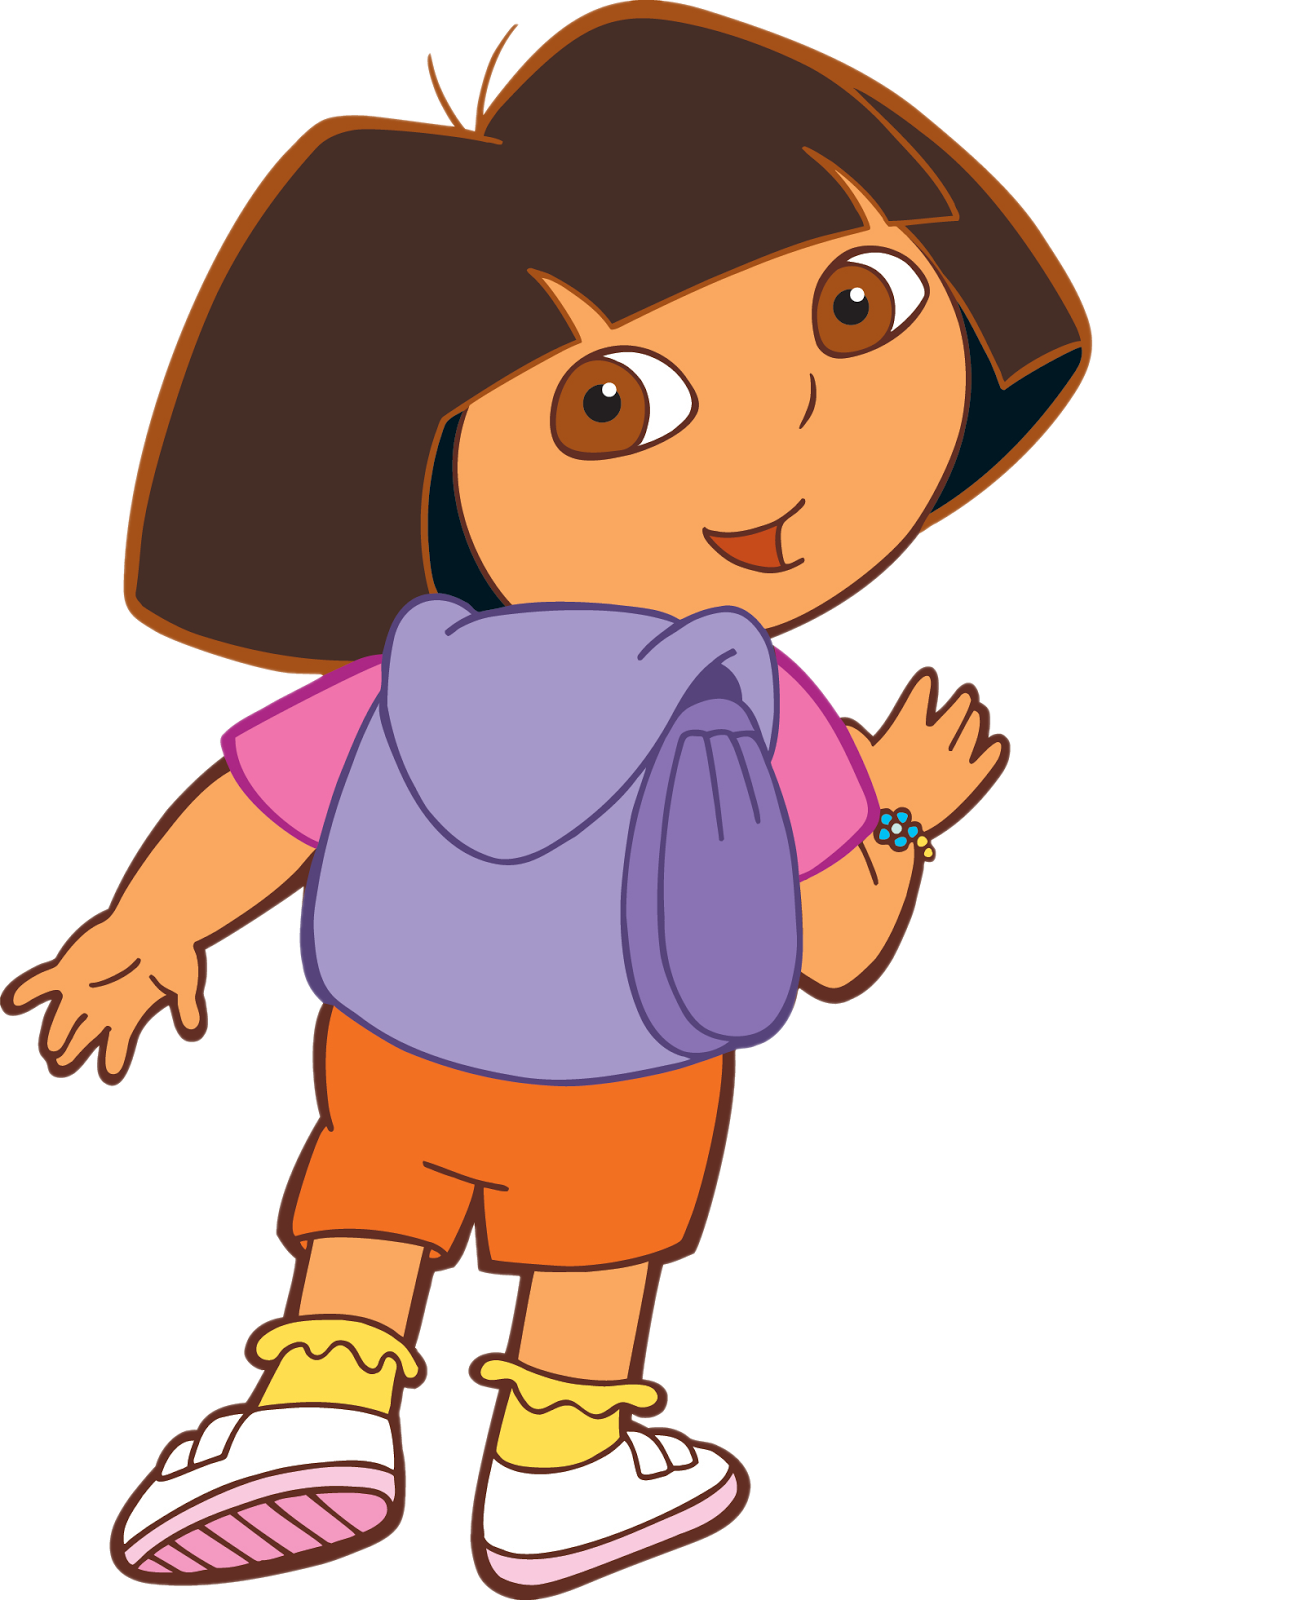 Cartoon Characters: Dora the Explorer (volume 1)